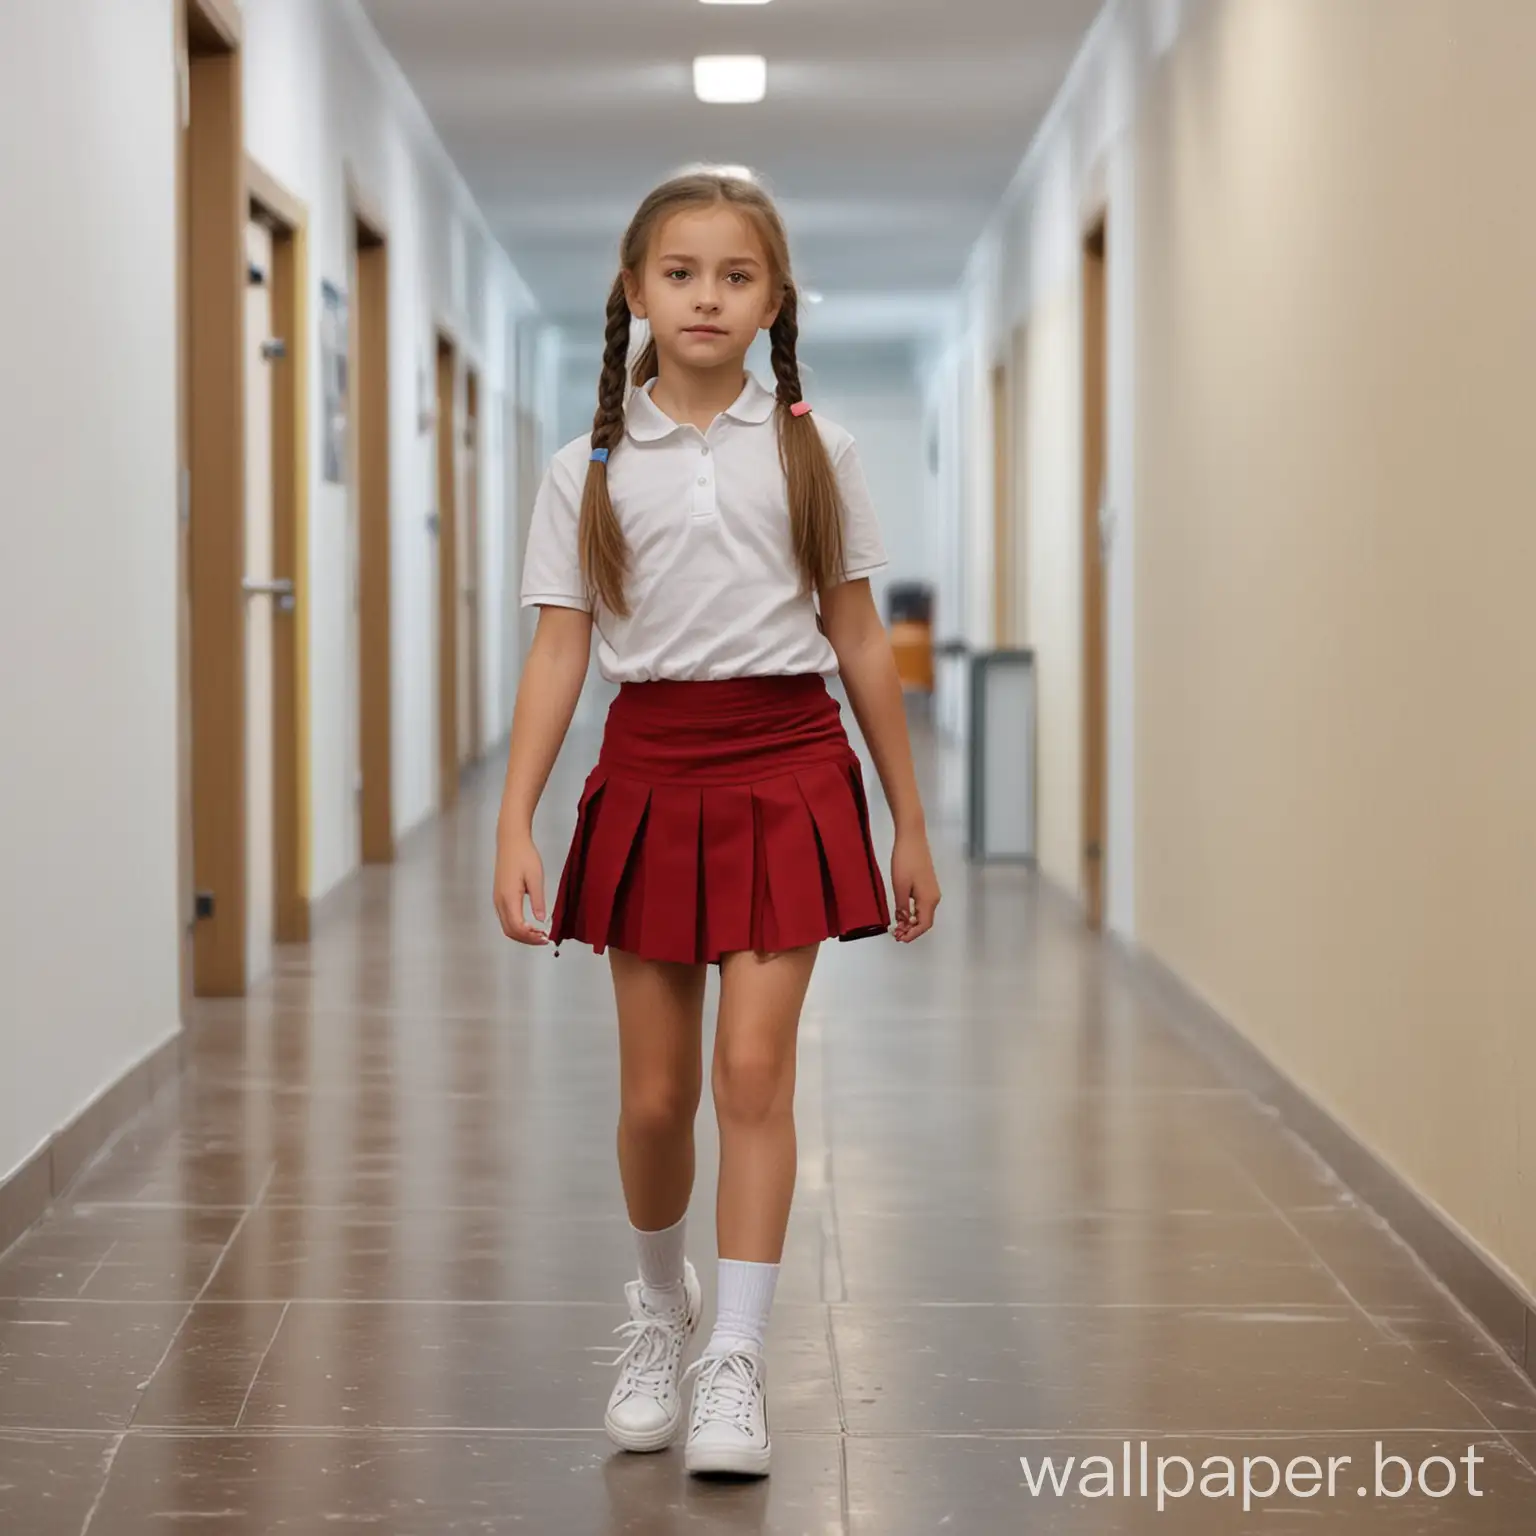 Dynamic-10YearOld-Girl-Walking-in-School-Hallway